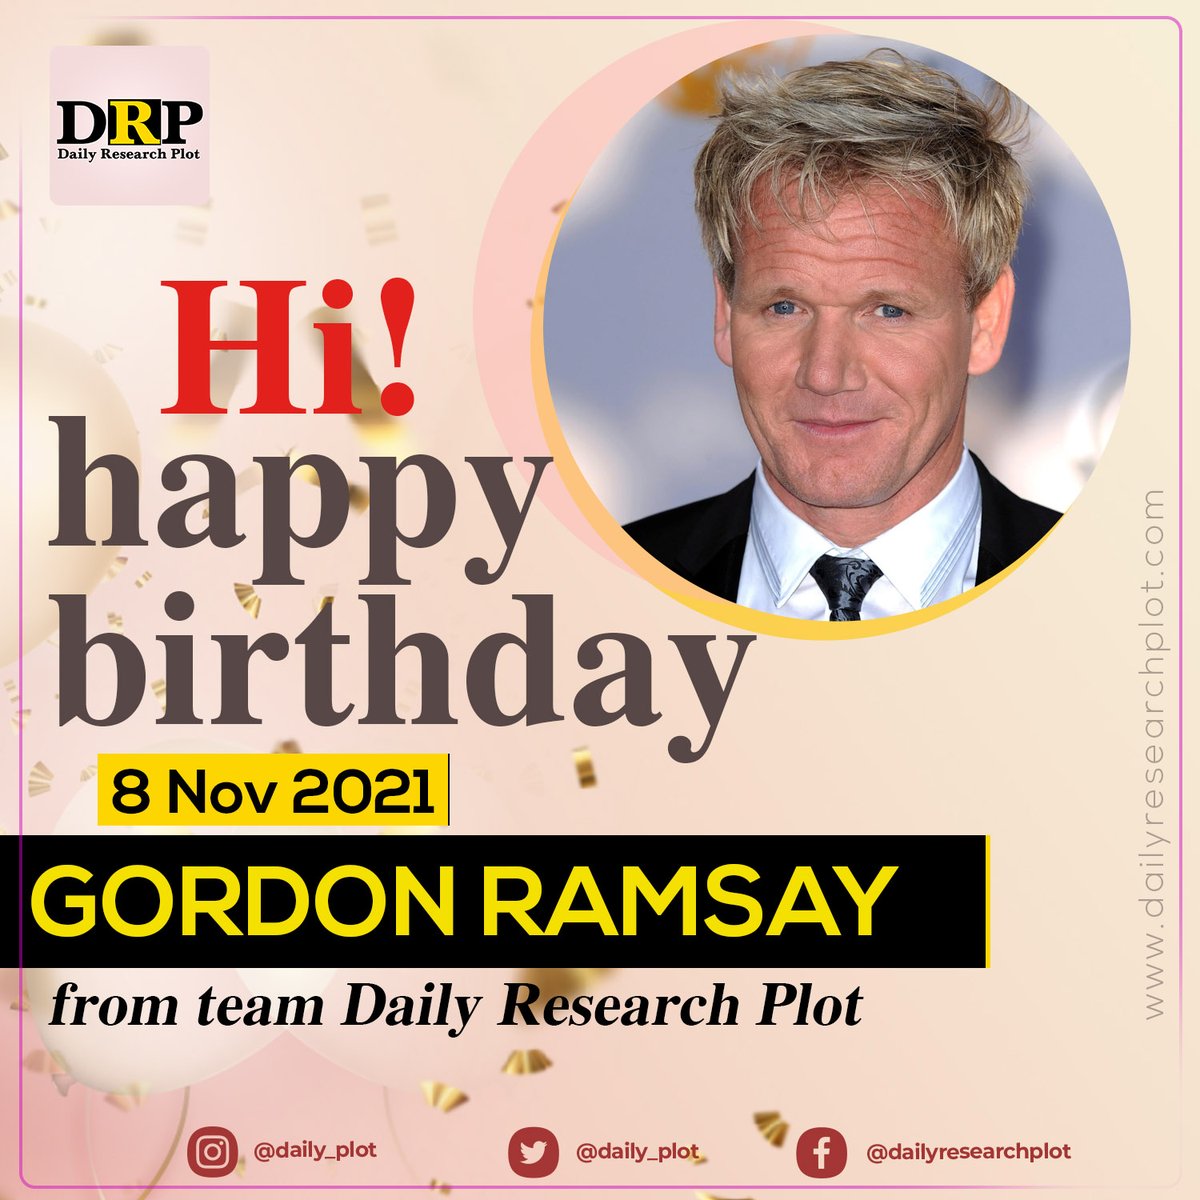 Happy Birthday!
Gordon Ramsay
@GordonRamsay 
#HappyBirthdayGordonRamasay
#DrpMedia https://t.co/nXSELDGjO1